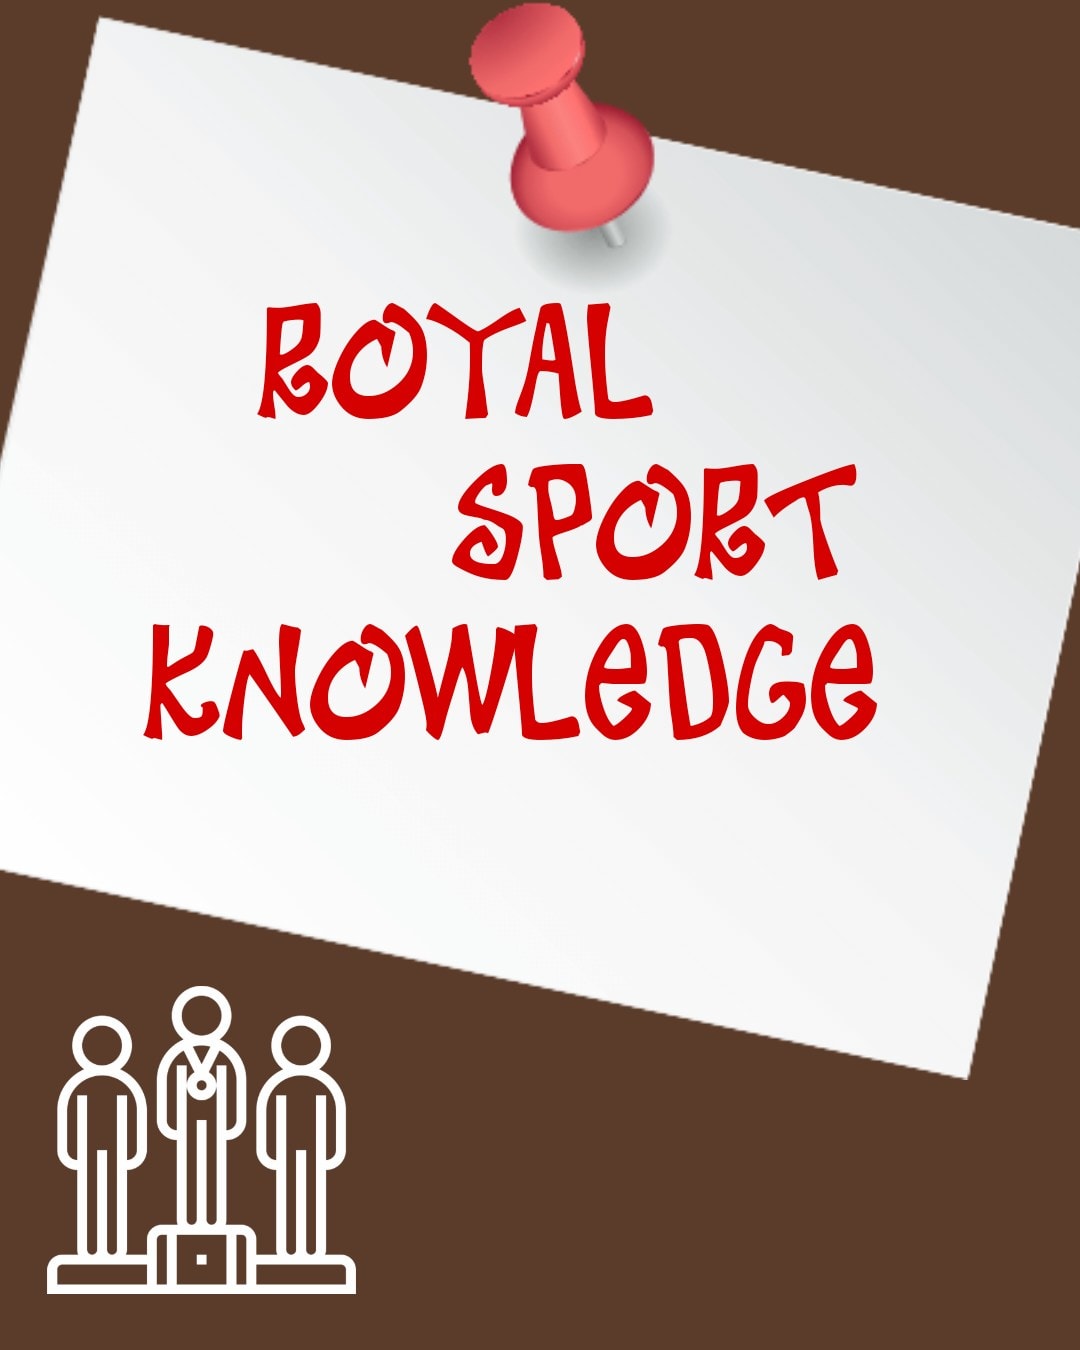 Royal Sport Knowledge